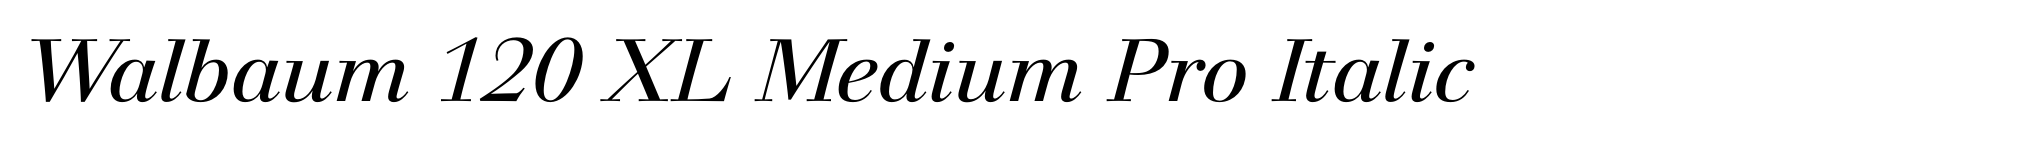 Walbaum 120 XL Medium Pro Italic image